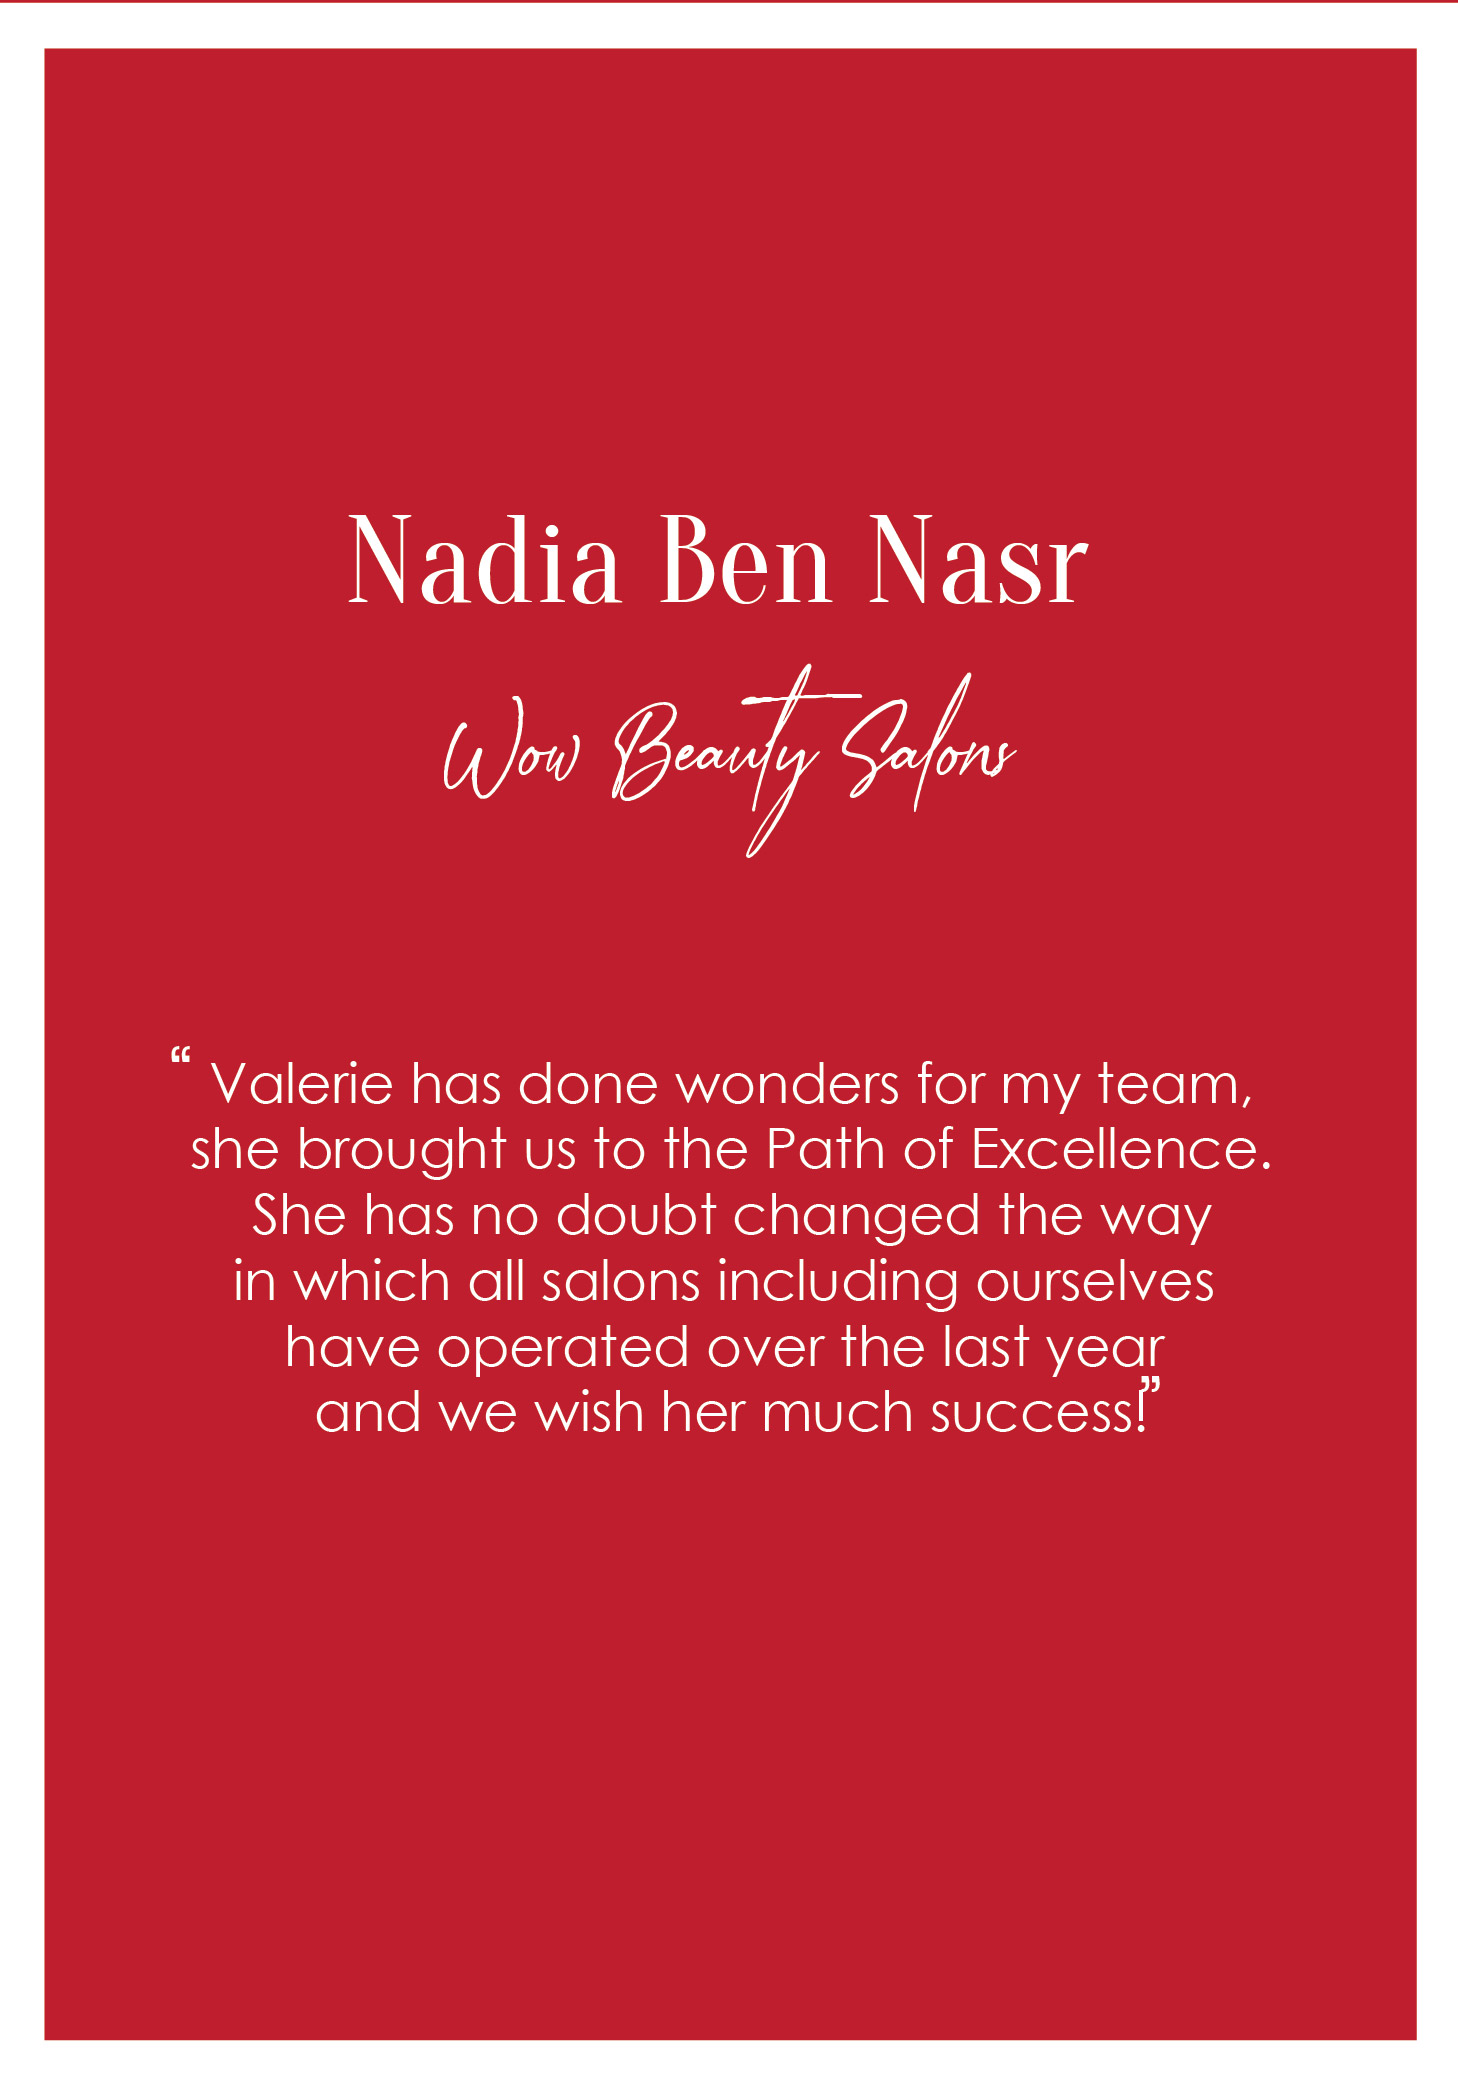 Client Testim Nadia Ben Nasr new 1000-01